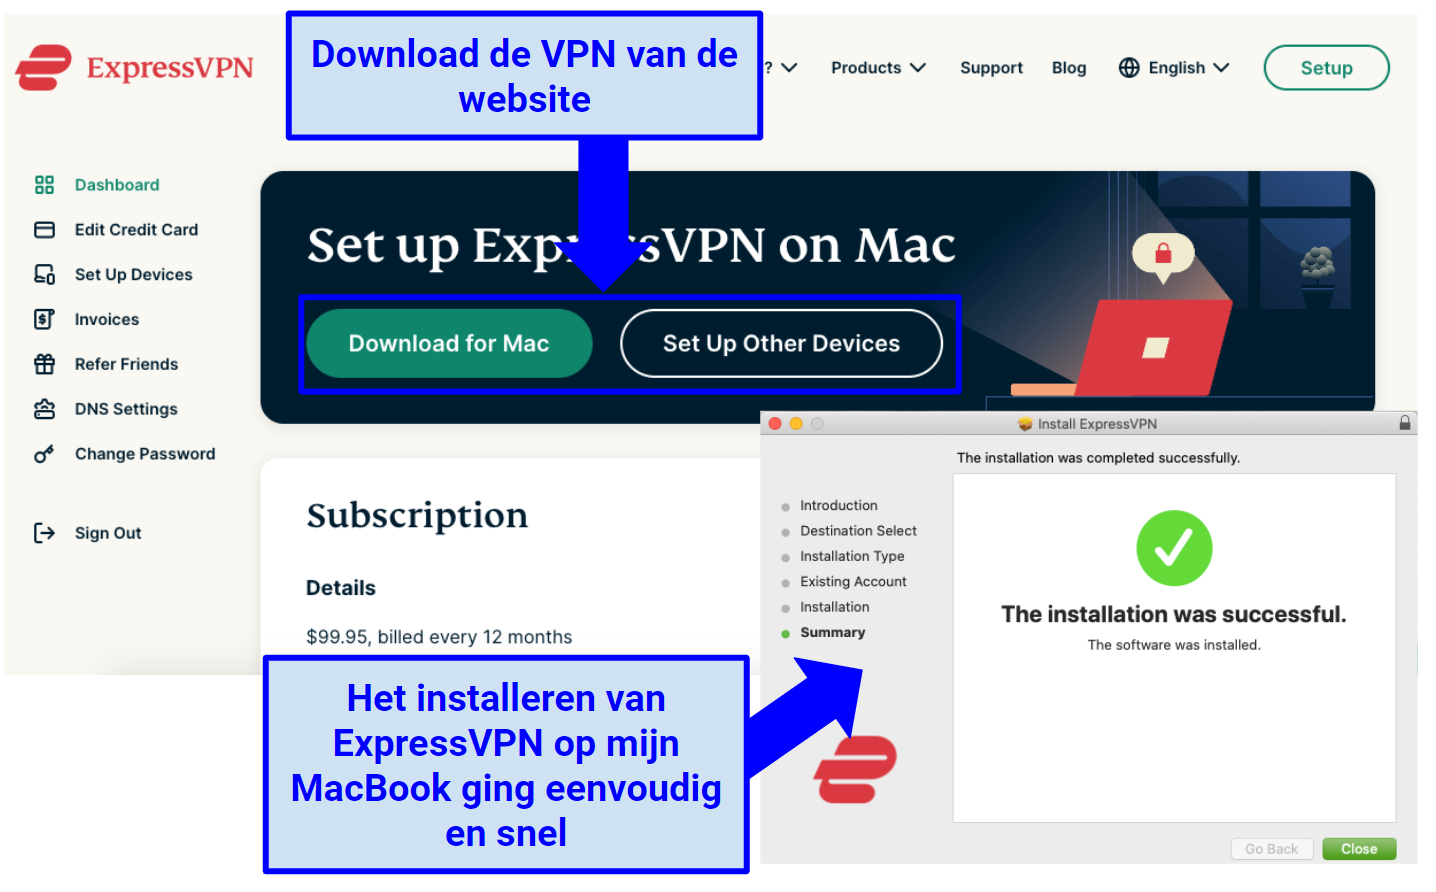 Screenshot of the download link from ExpressVPN's website